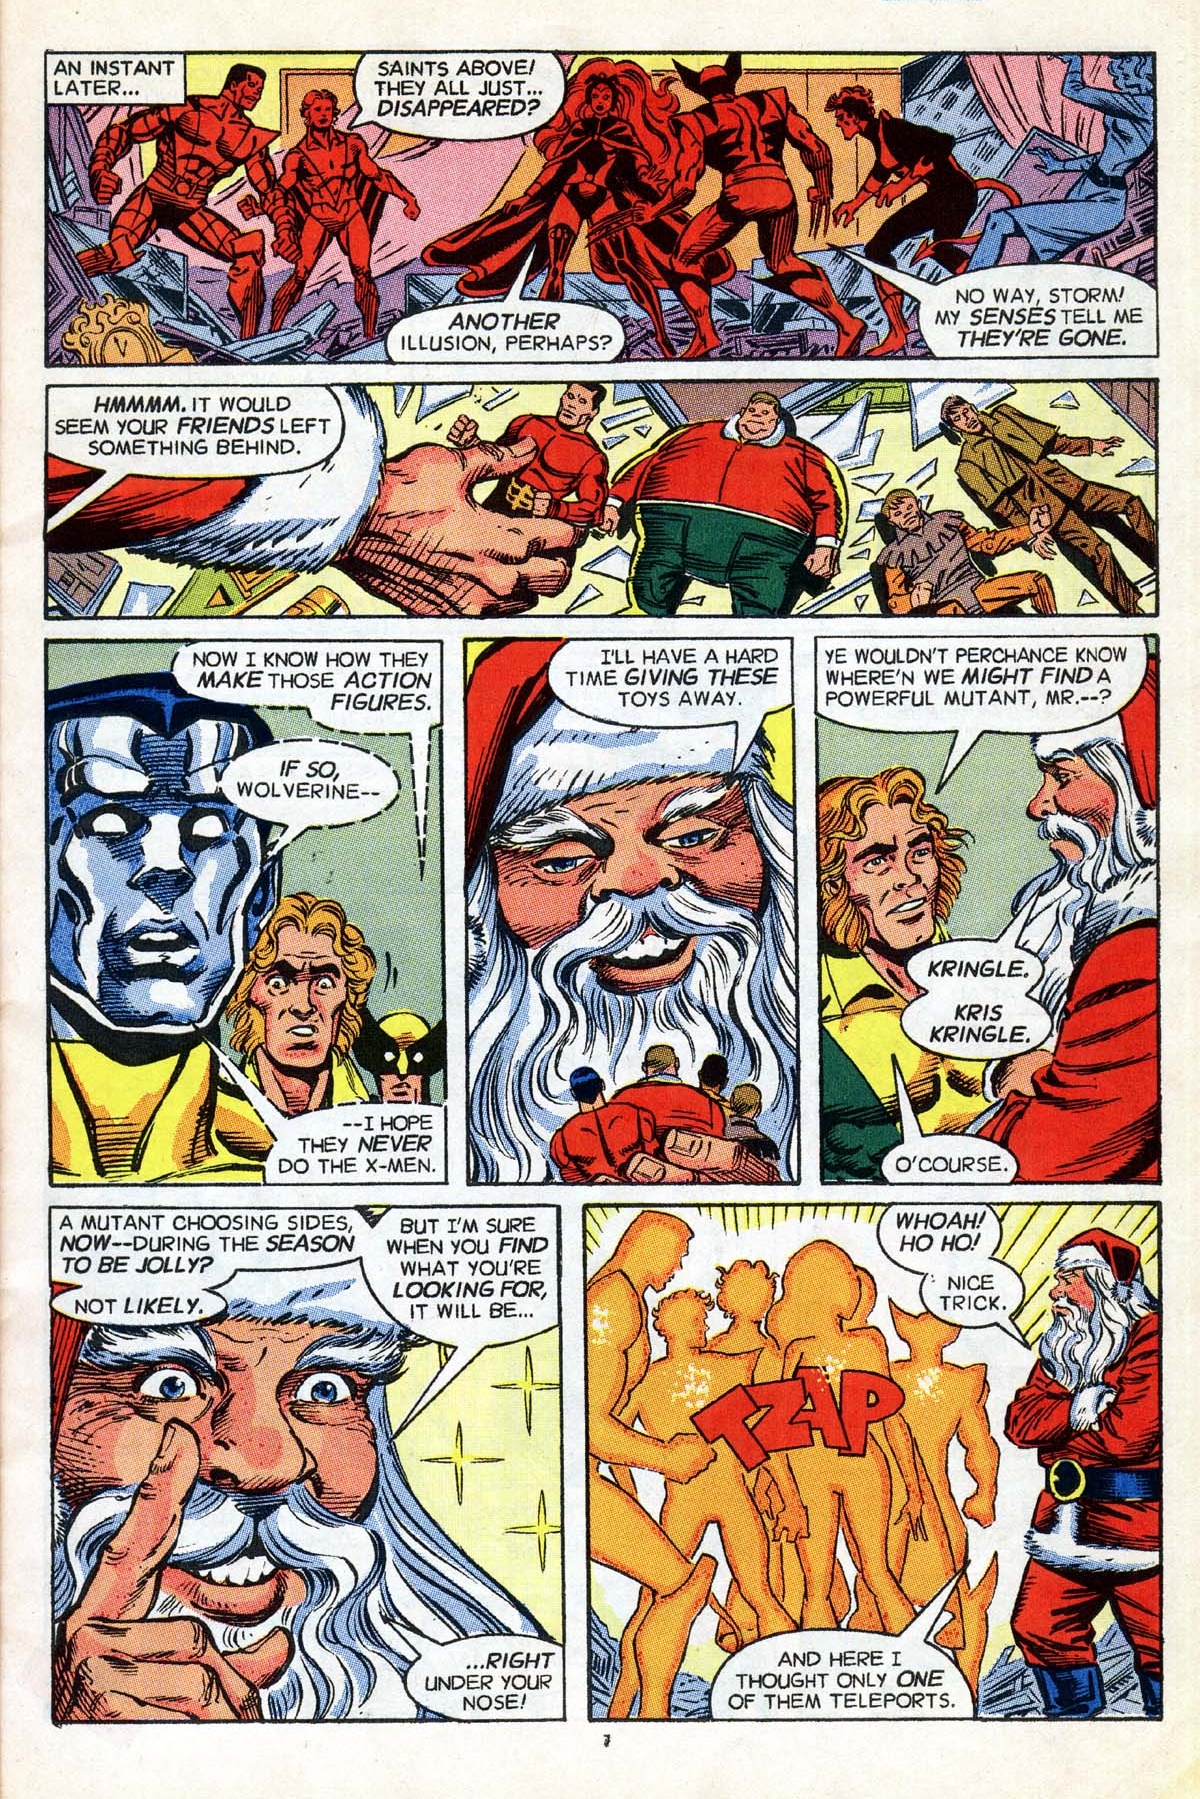 Marvel Holiday Special (1991)